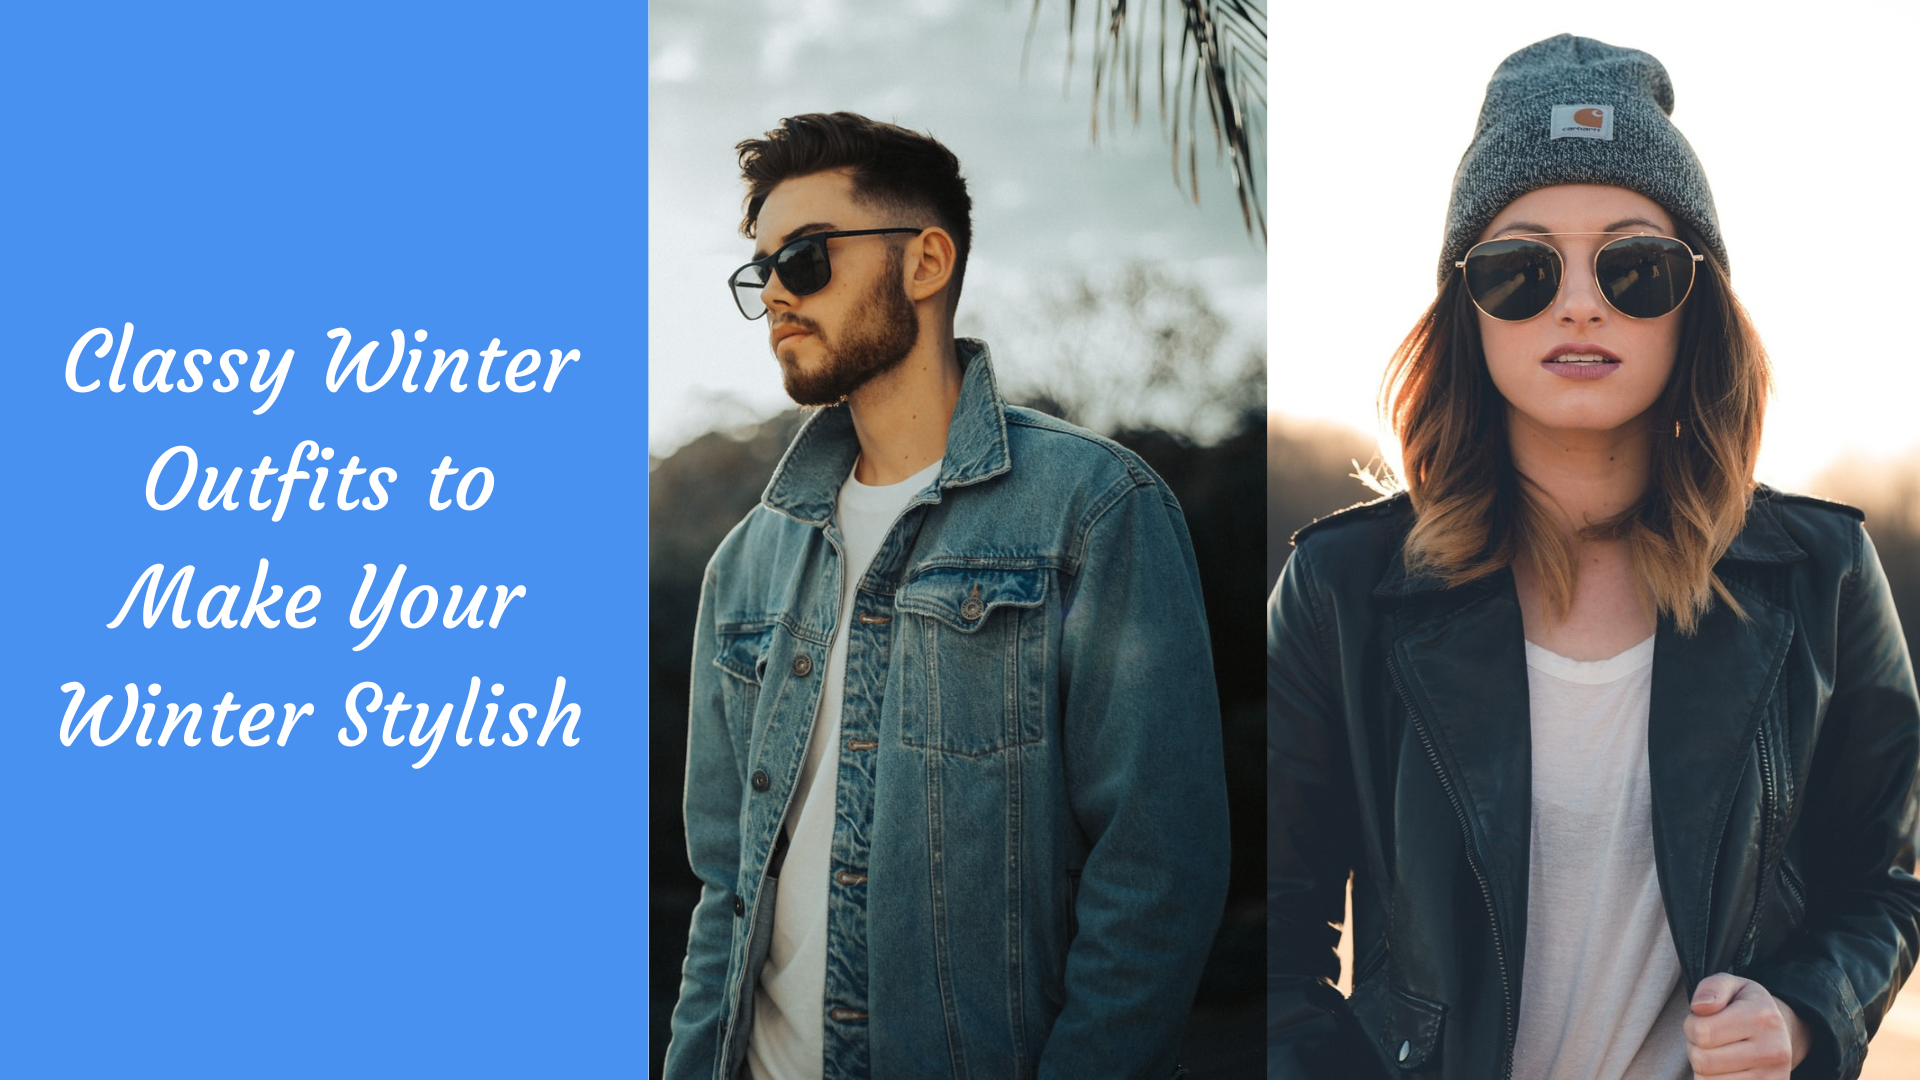 Classy Winter Outfits To Make Your Winter Stylish - The Kosha Journal